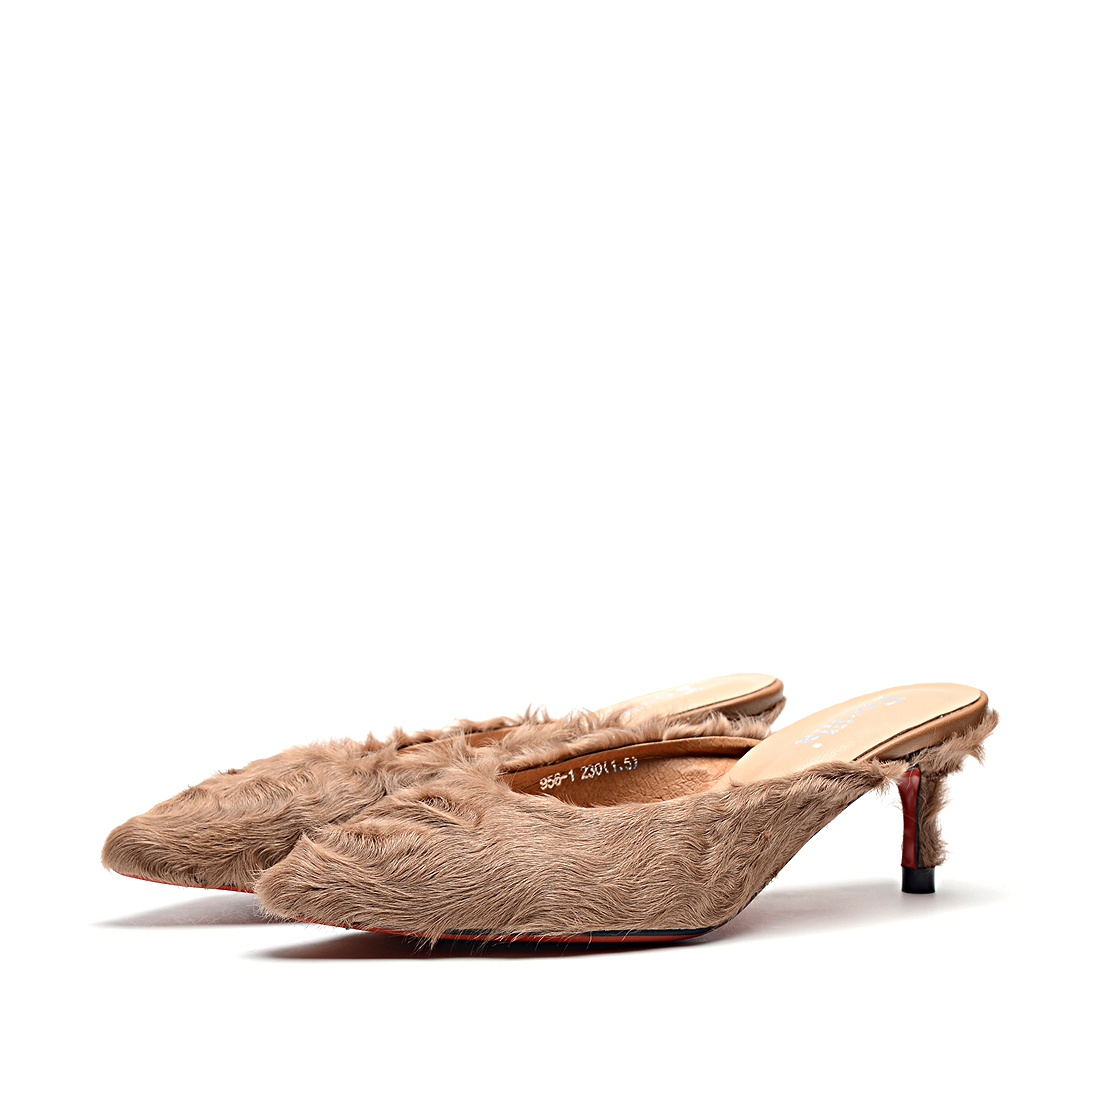 [Fovilla]欧美风简约羊毛织物拖鞋(尺码标准)
编号：A3873T1A17